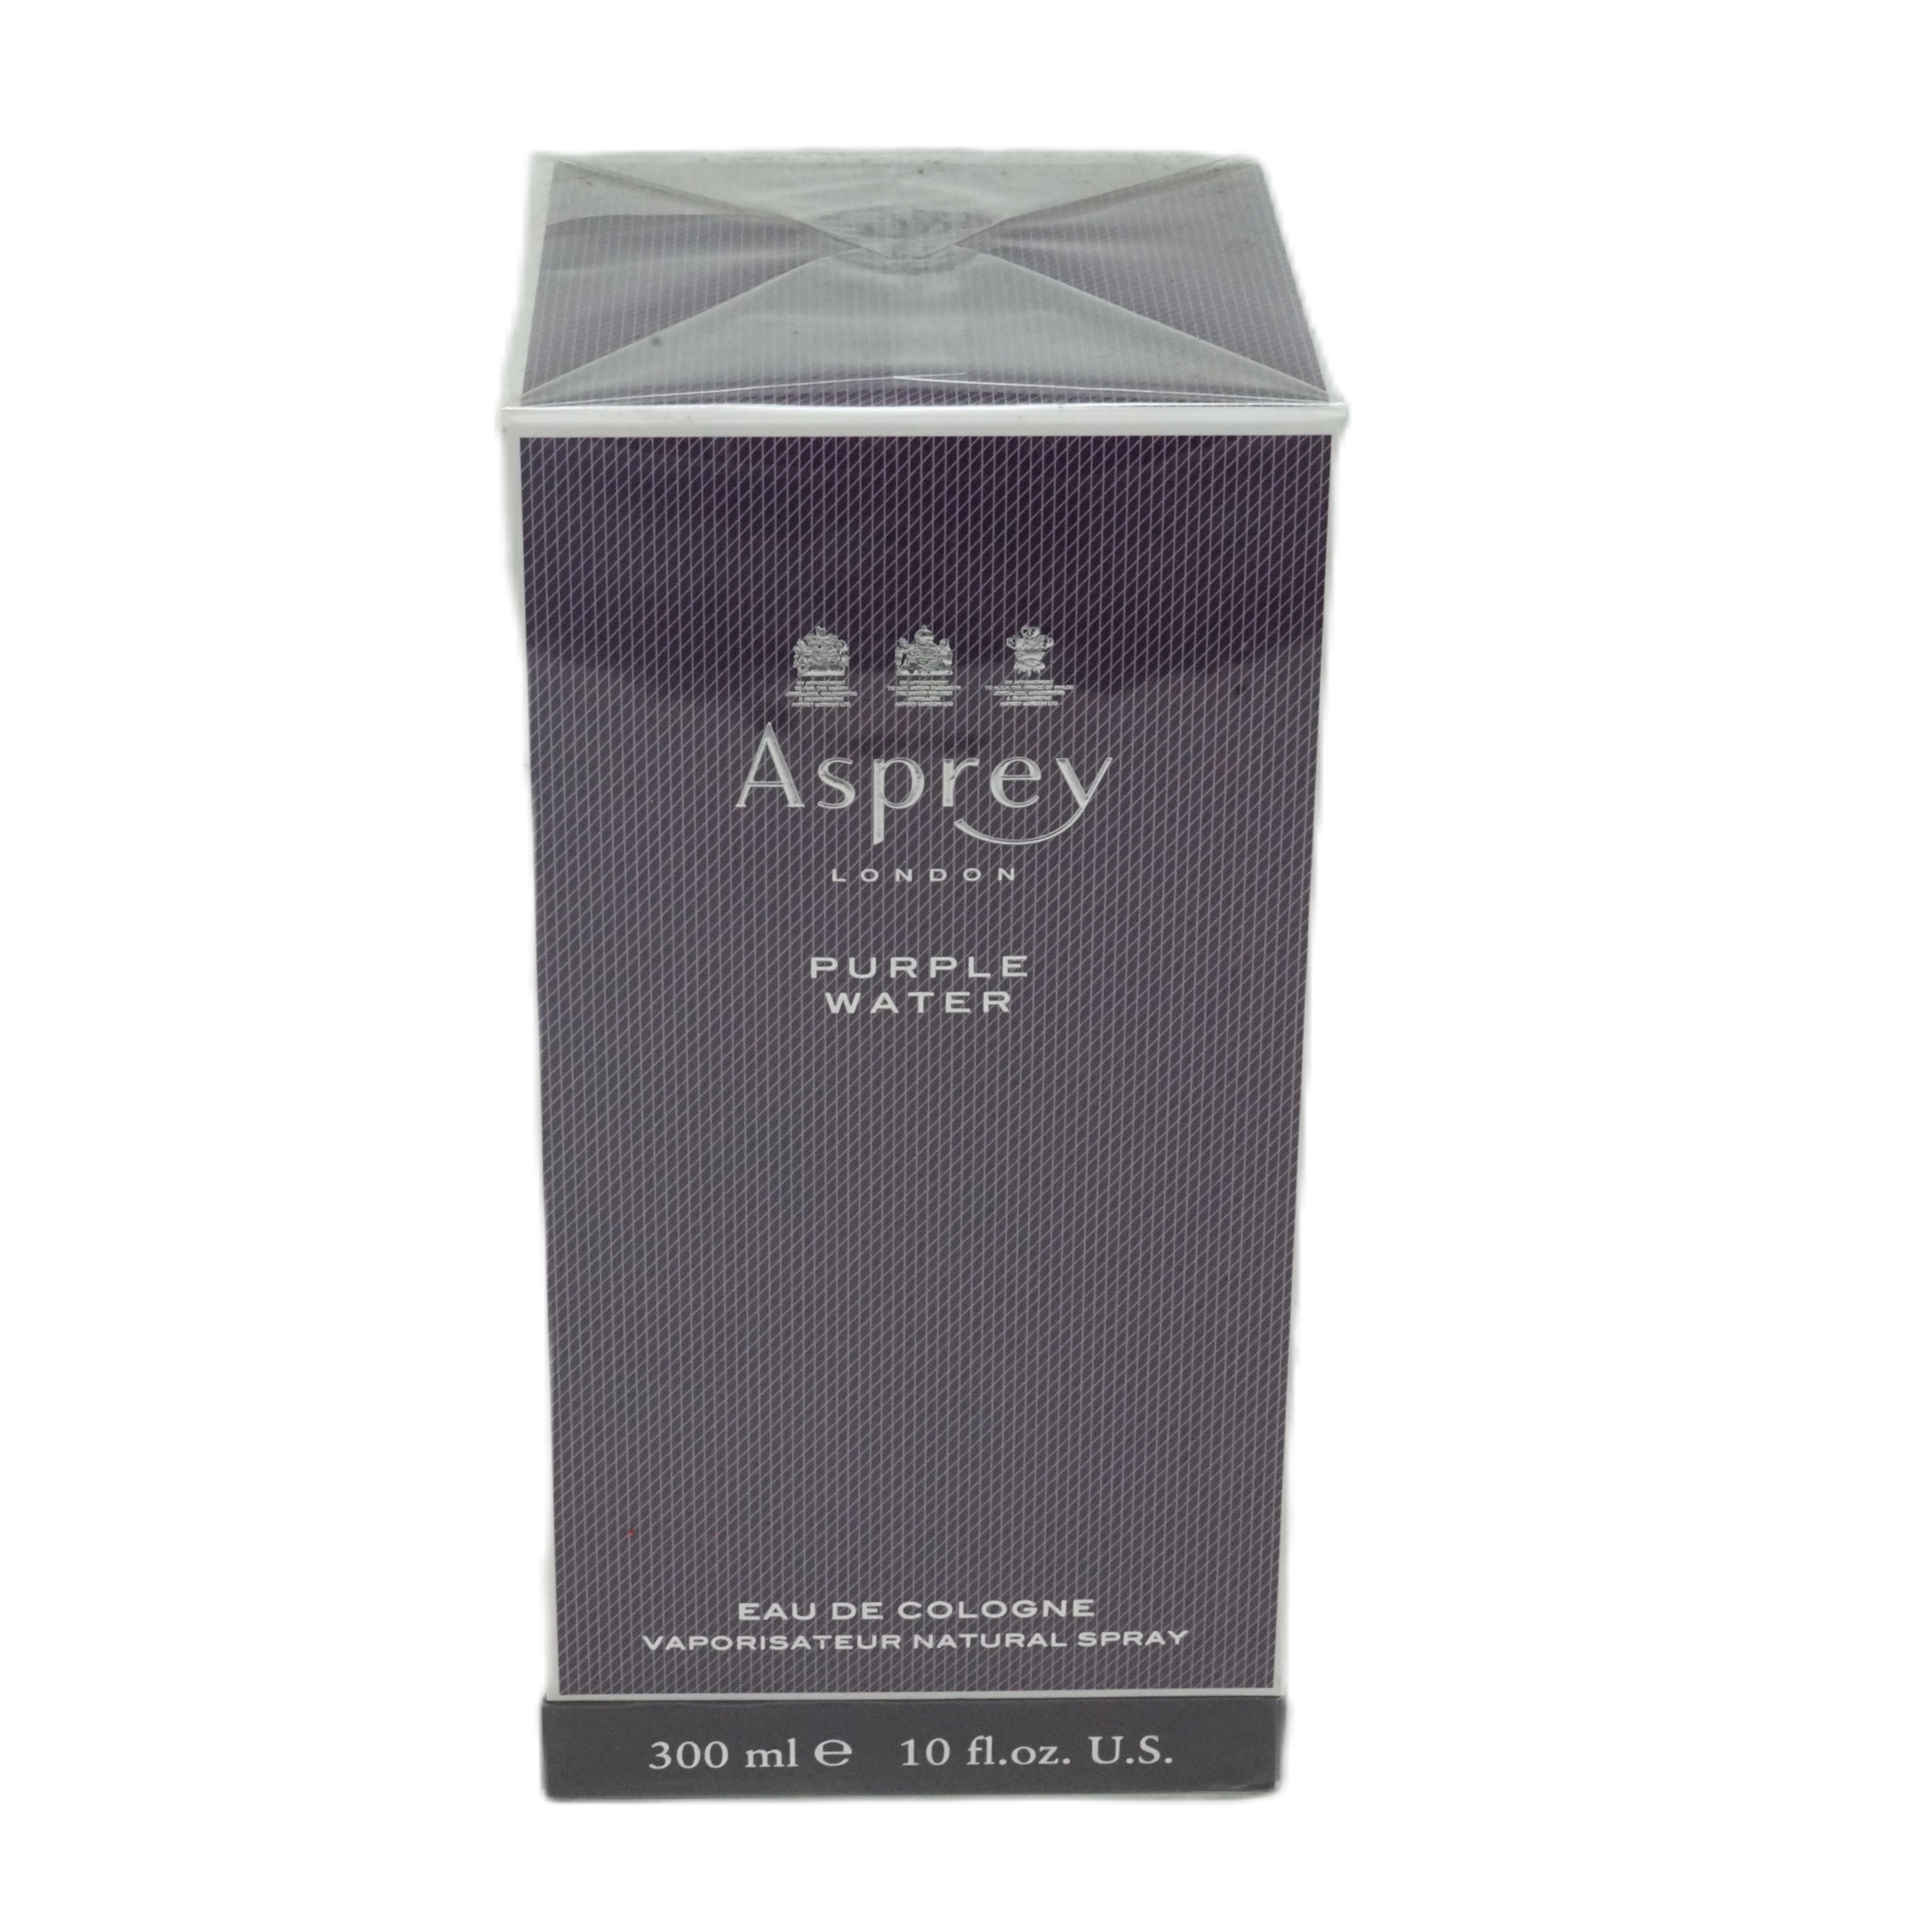 Asprey Purple Water Eau de Cologne Spray 300 ml